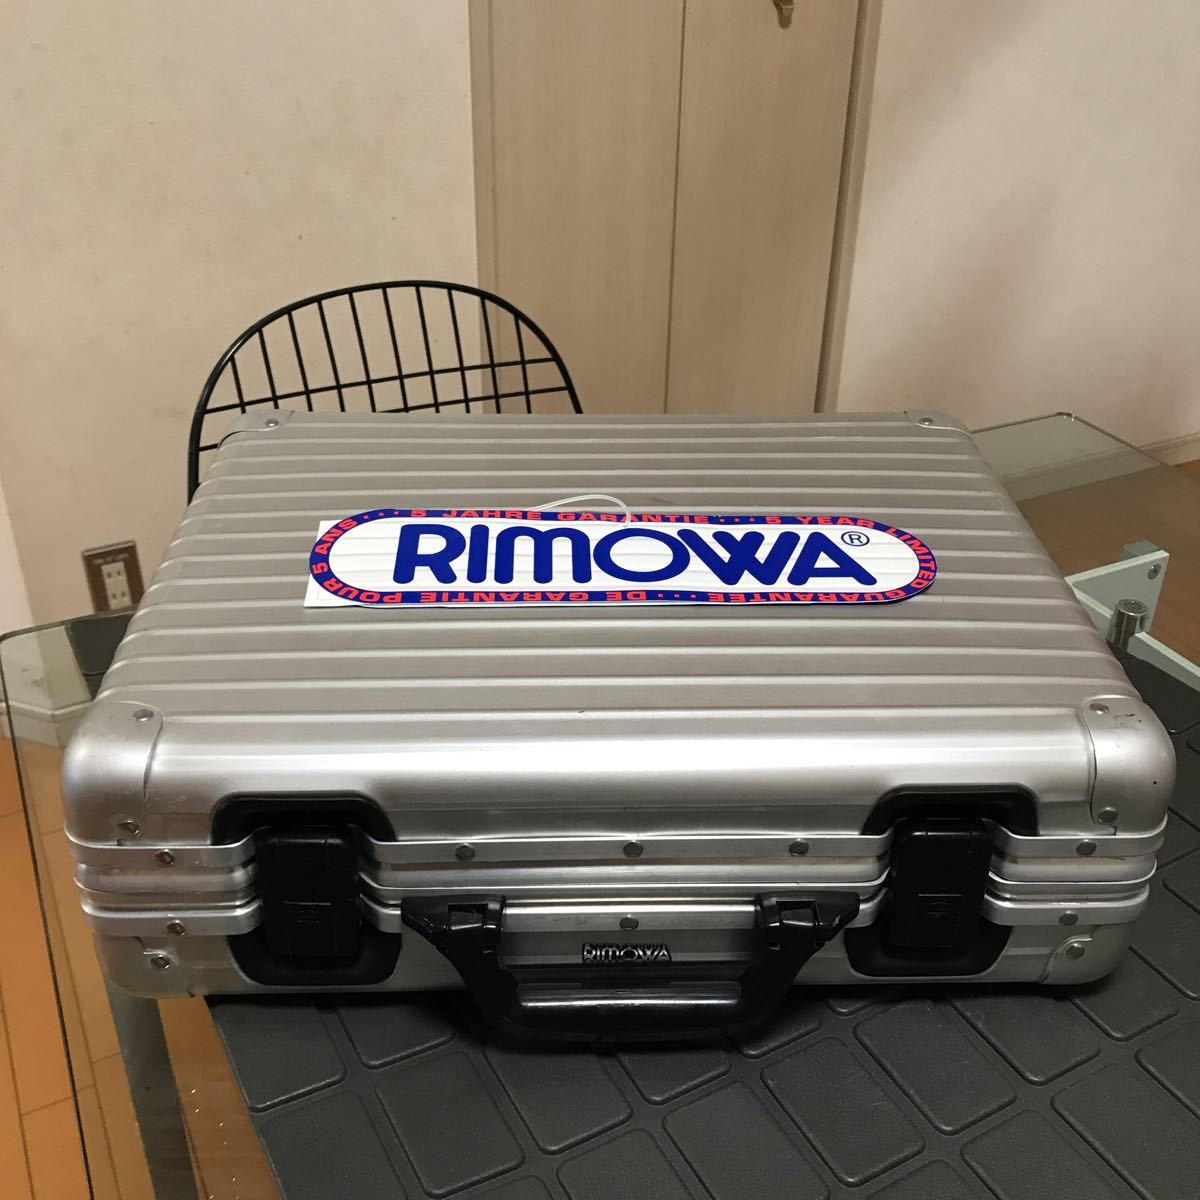  records out of production / rare / rare [RIMOWA] Rimowa attache case trunk case aluminium duralumin case Vintage / Old Rimowa Germany made 